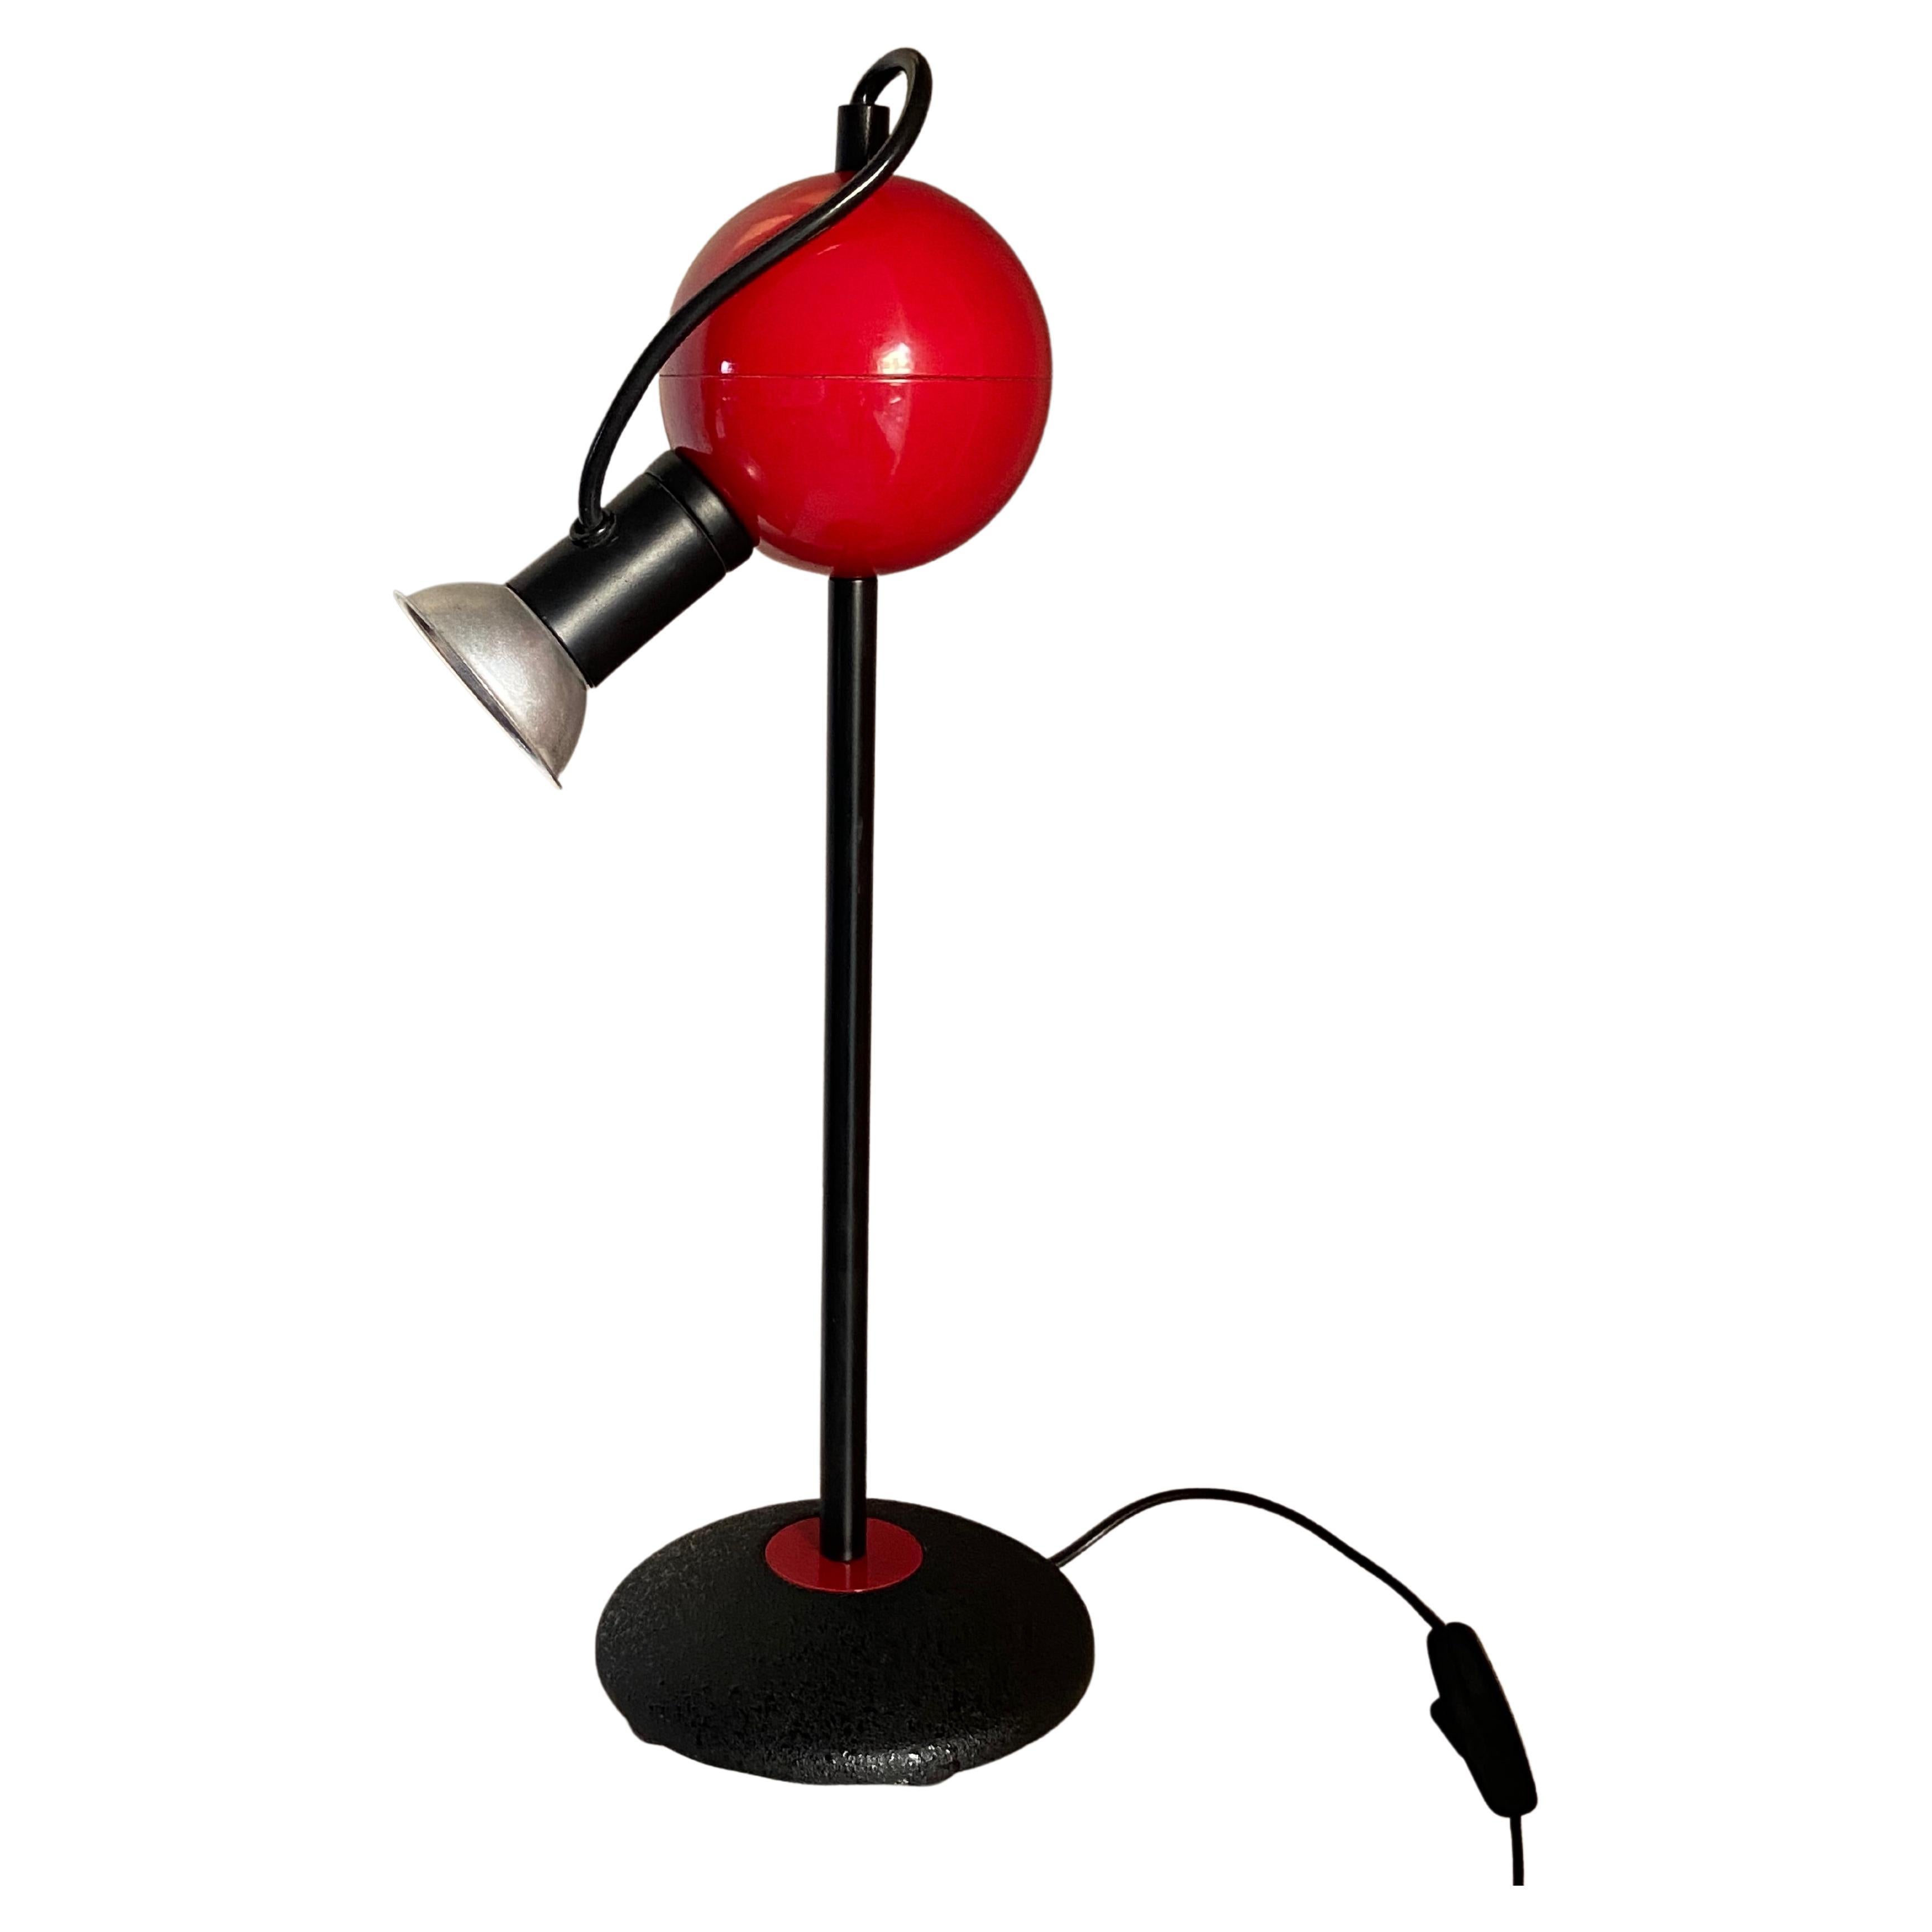 1980s Design Stefano Cevoli Table Lamp Produced by Vermezzo Made in Italy